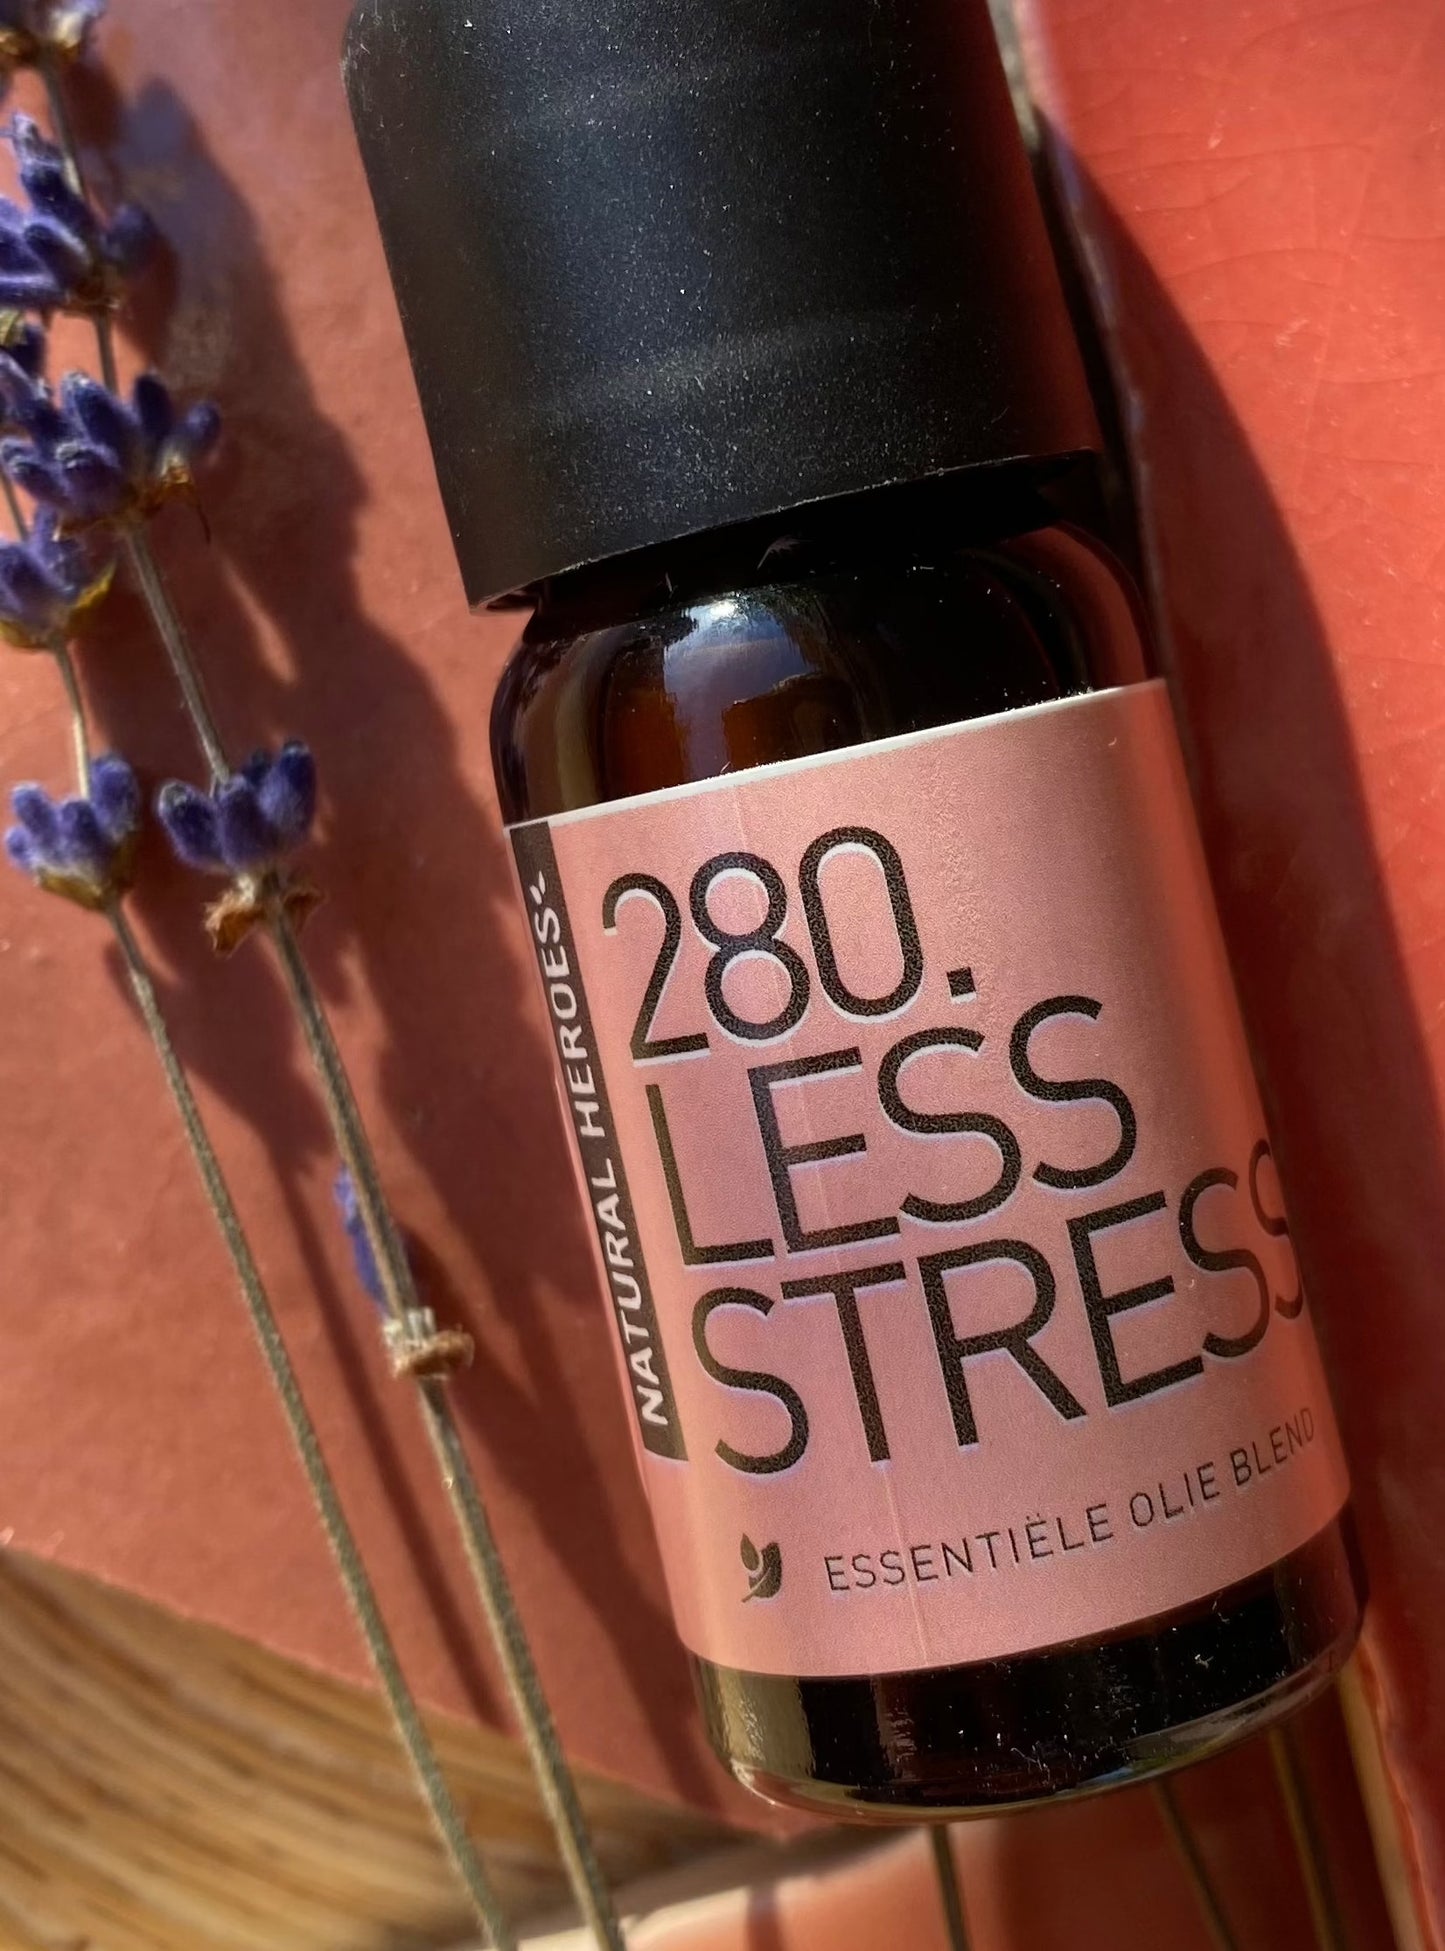 Essentiële olie - Less stress